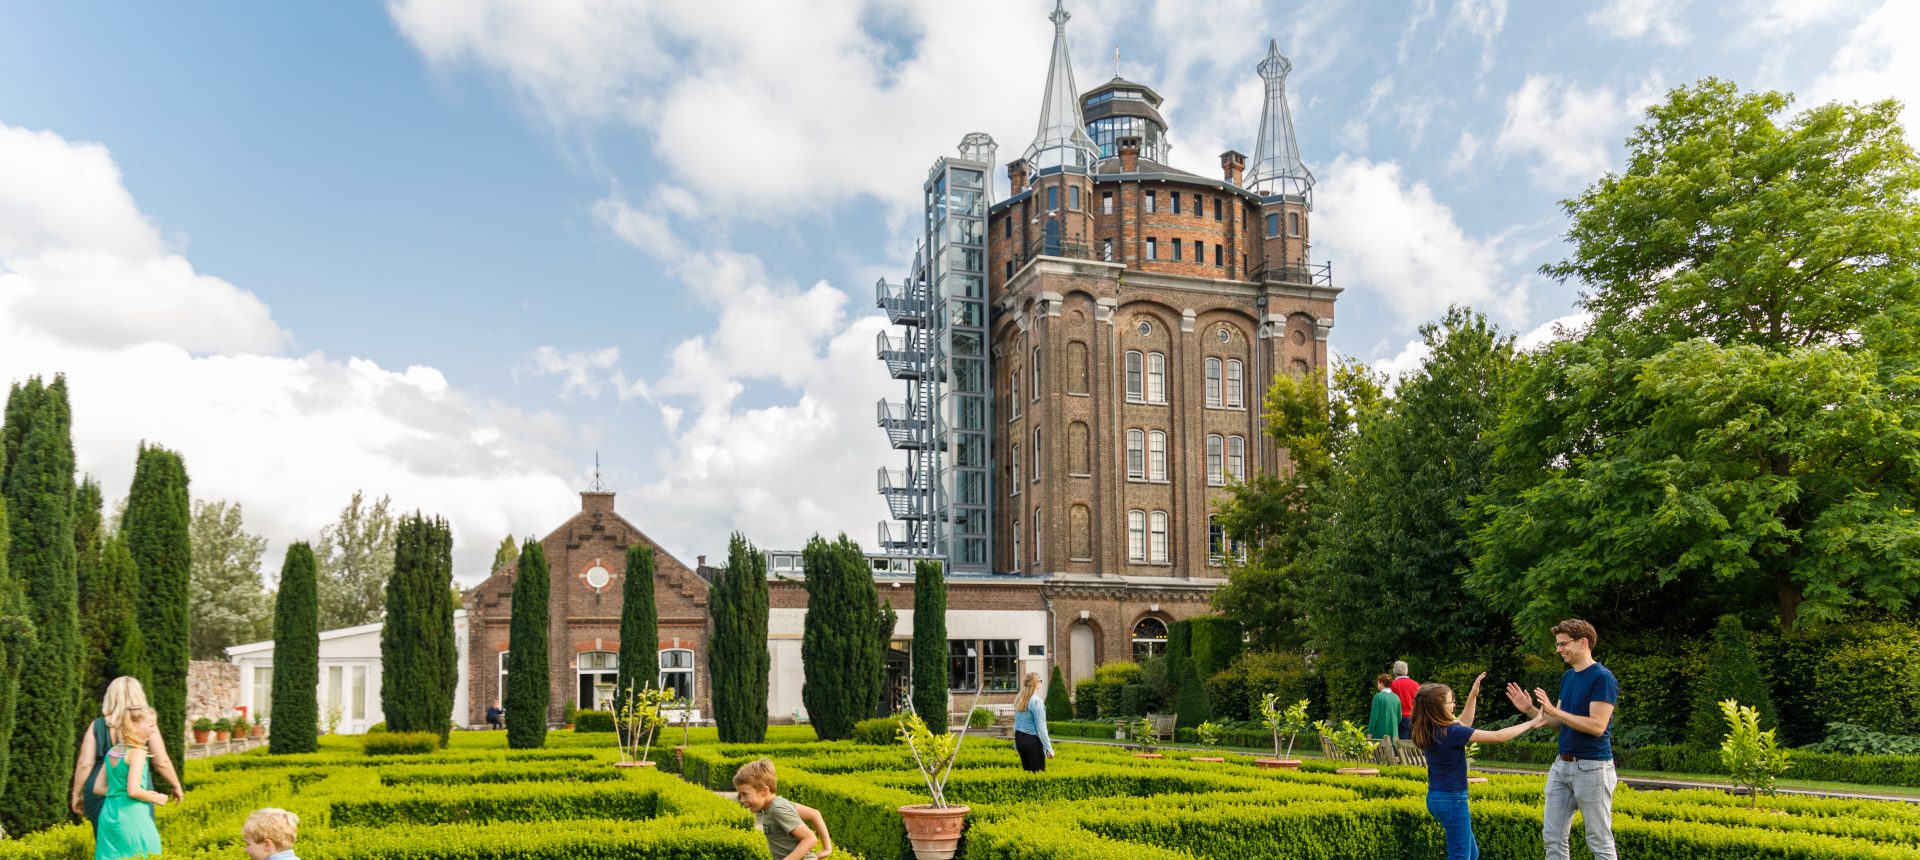 Hotel Villa Augustus - Dordrecht - tuin - watertoren